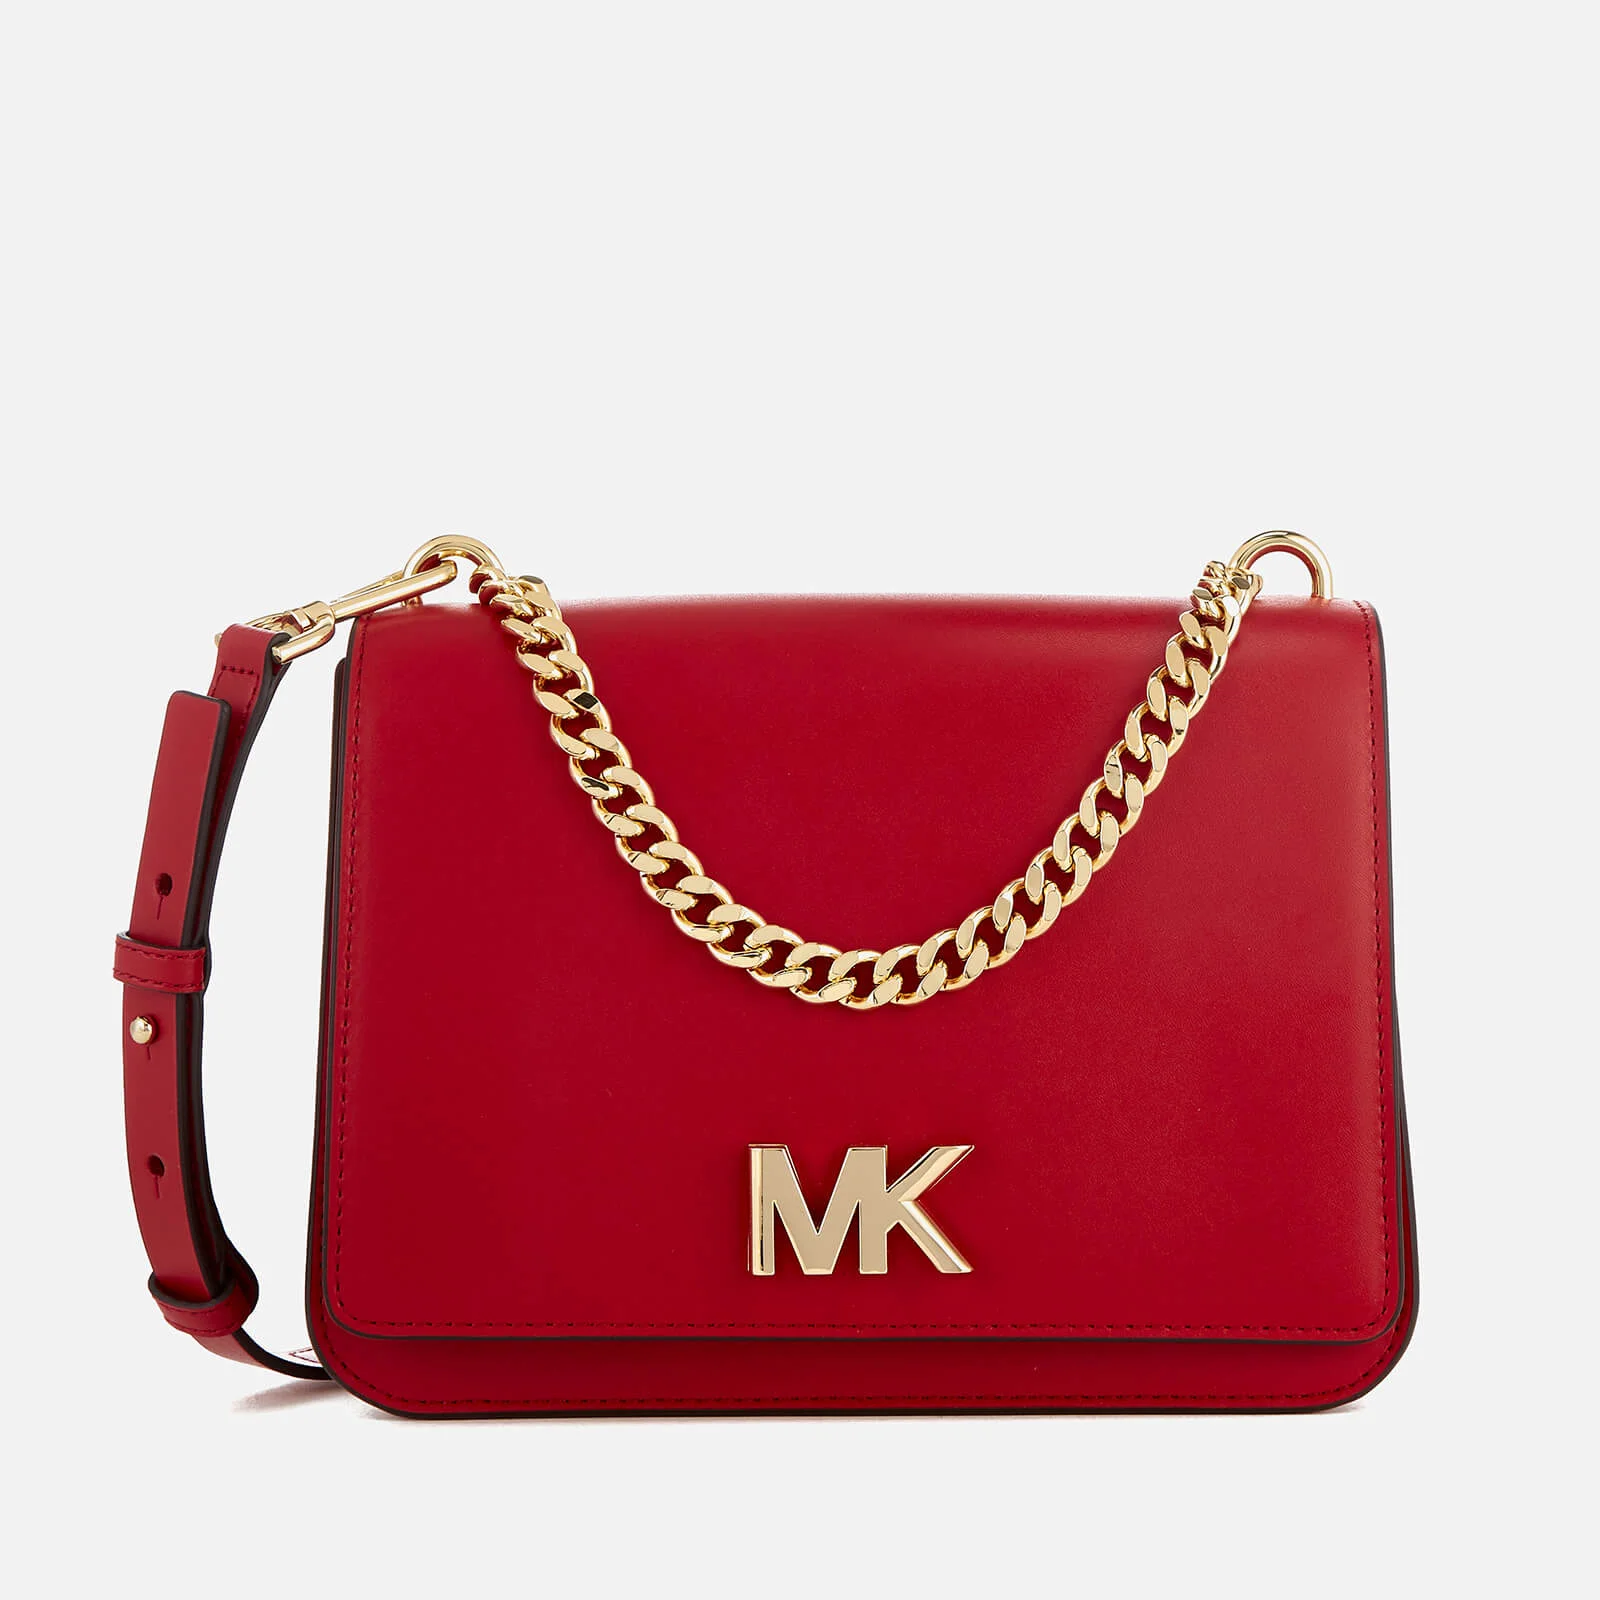 MICHAEL MICHAEL KORS Women's Mott Large Chain Swag Shoulder Bag - Bright Red Image 1